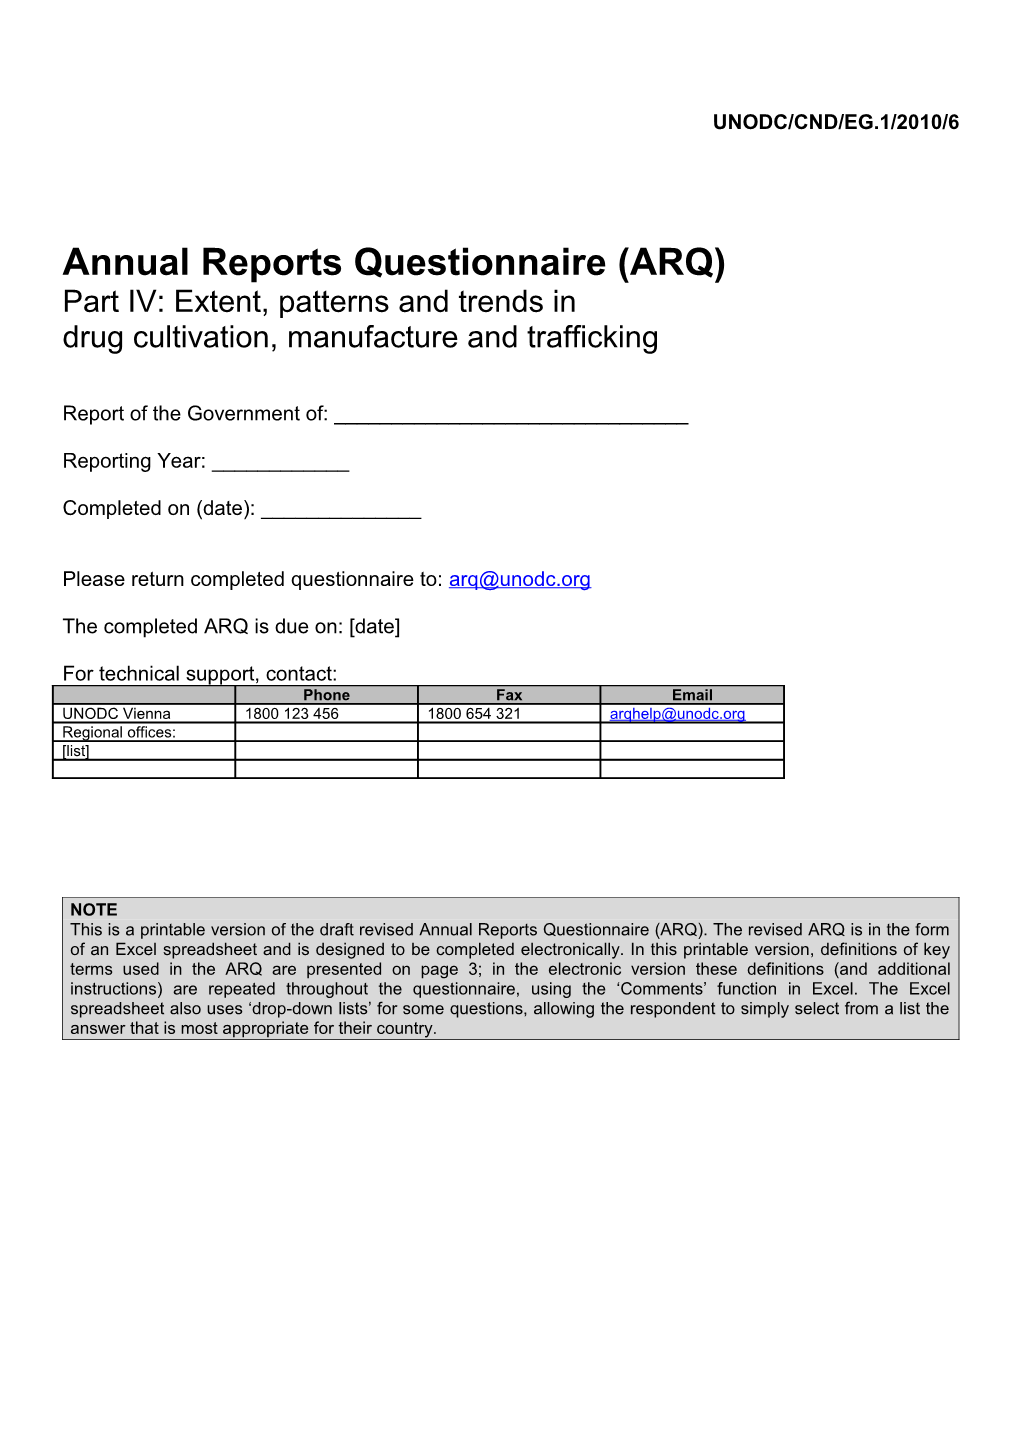 Annual Reports Questionnaire (ARQ)